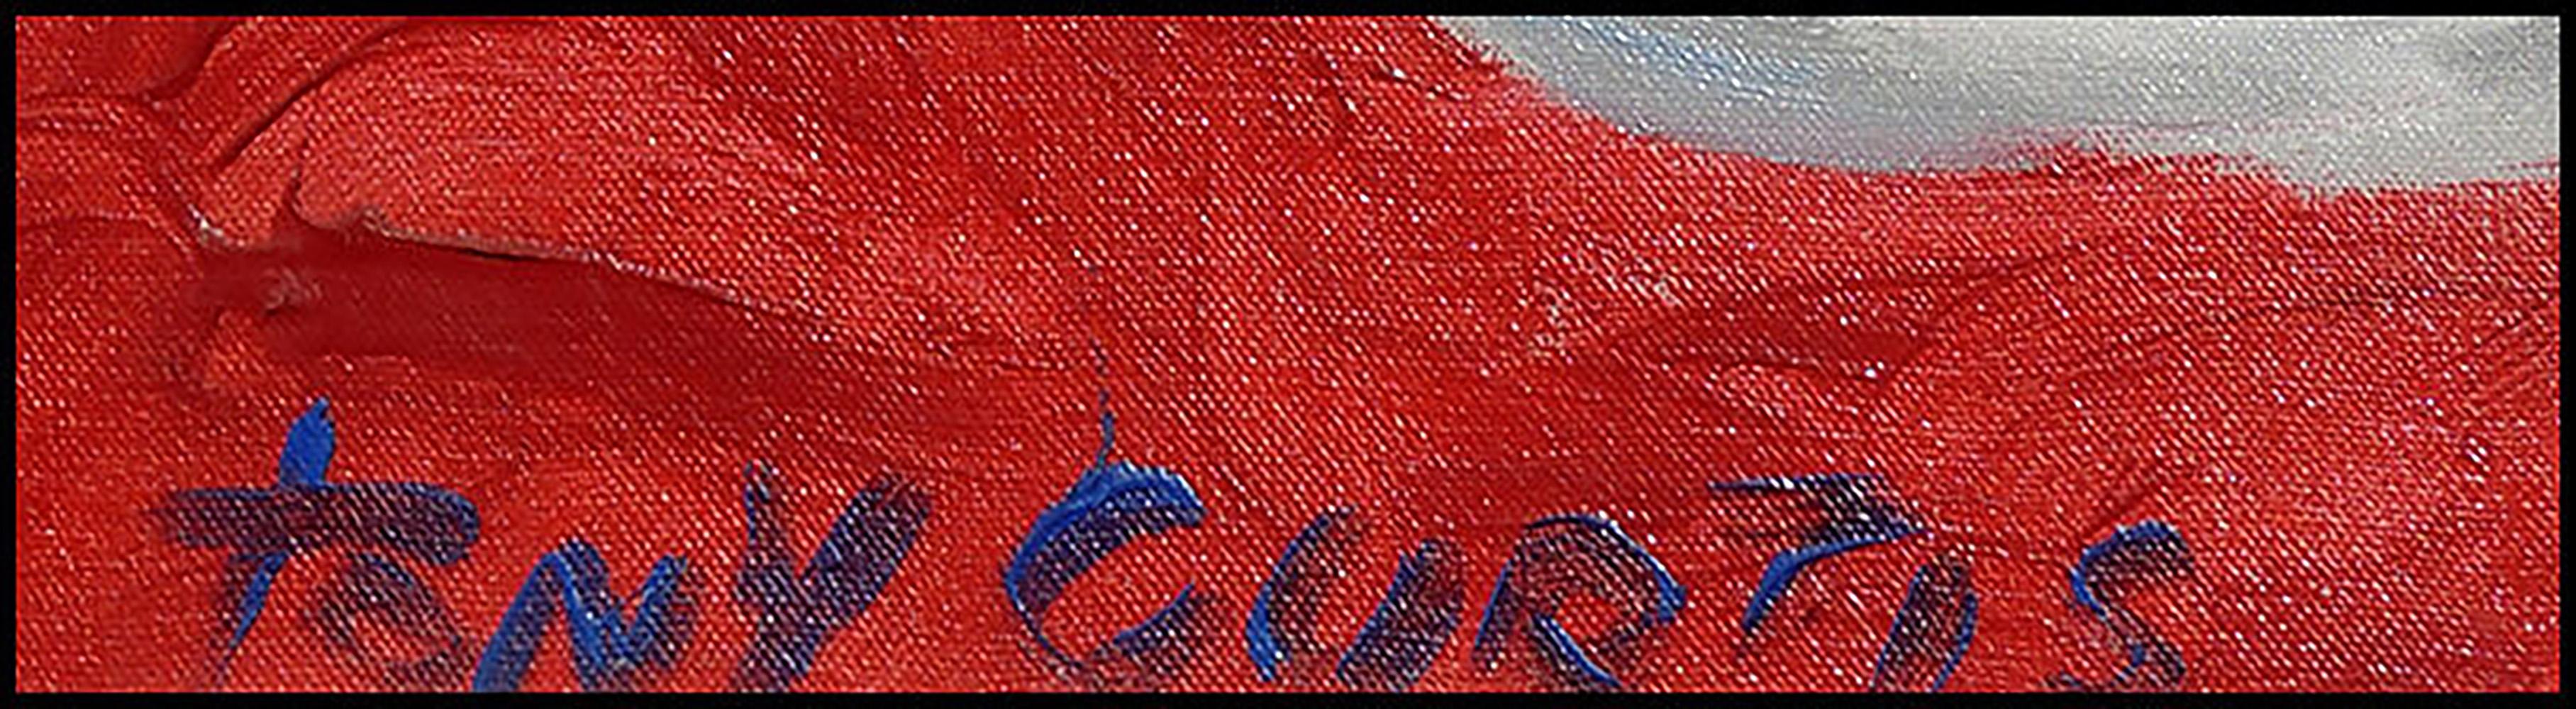 Artist: Tony Curtis
Title: Original Starry Flowers
Medium: Oil Paint on Canvas
Edition Number: Original Painting
Artwork Size: 30 x 24 Unframed
Frame Size: 38 x 32 Framed